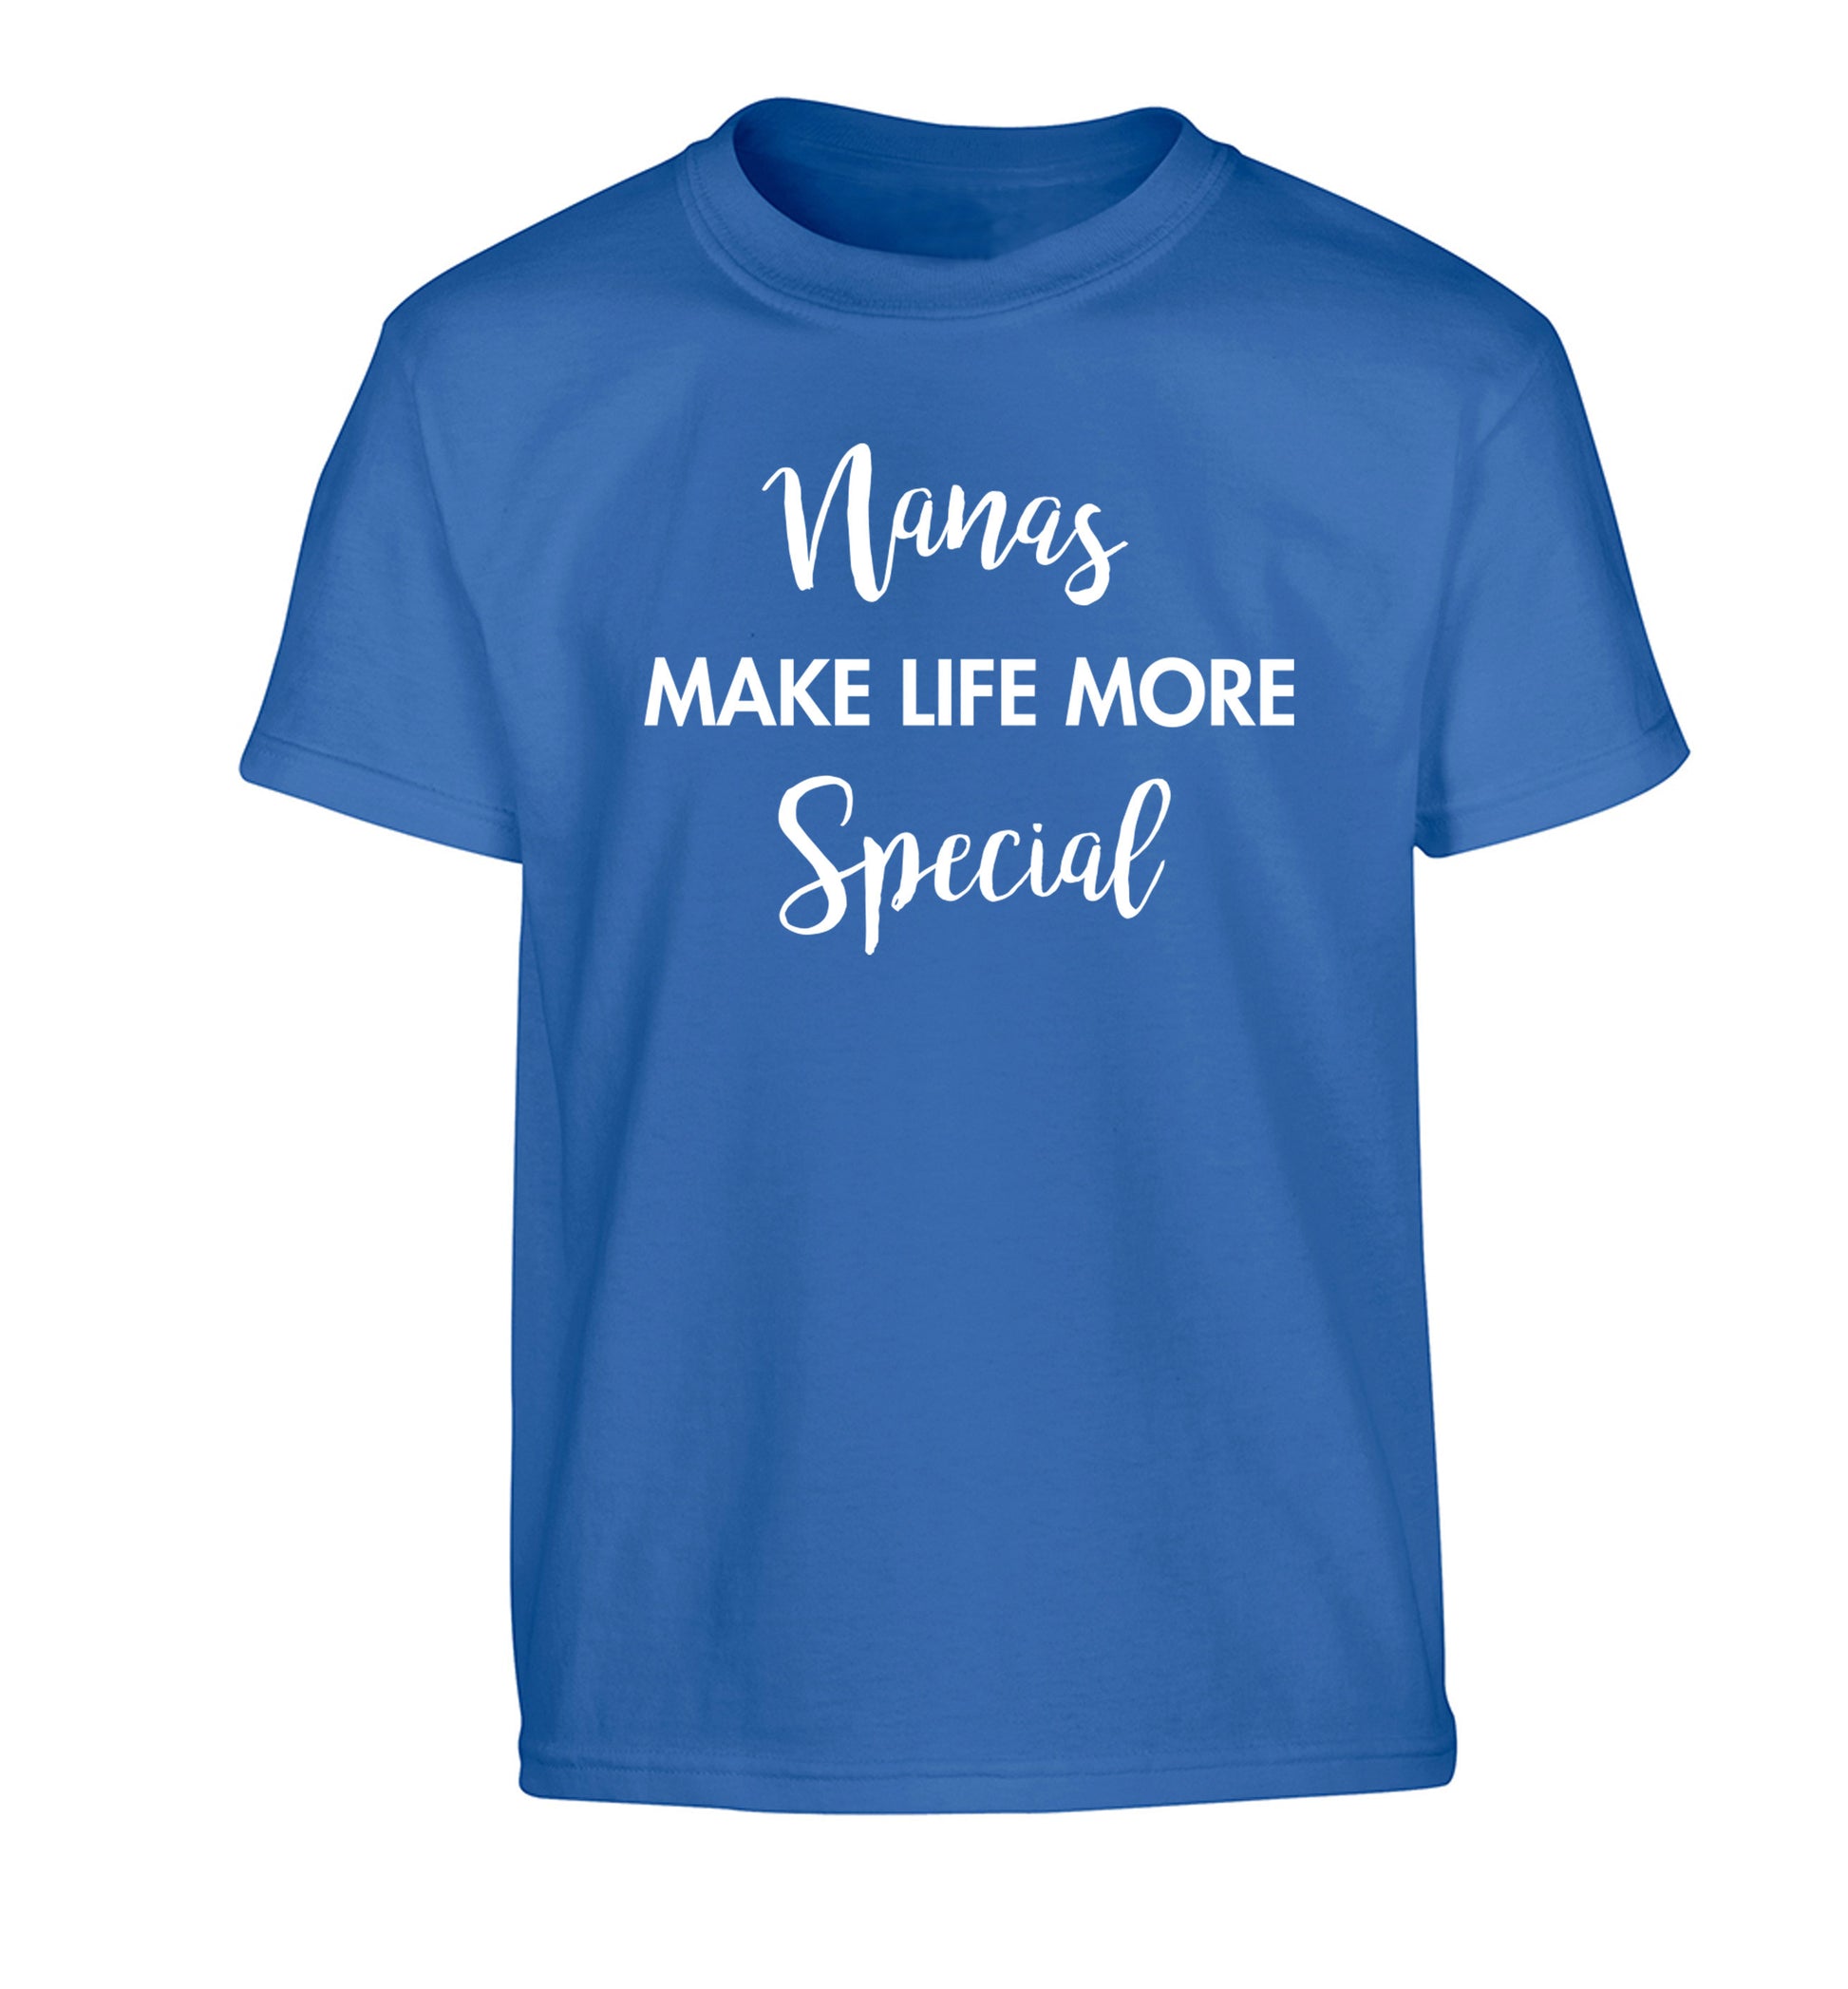 Nanas make life more special Children's blue Tshirt 12-14 Years